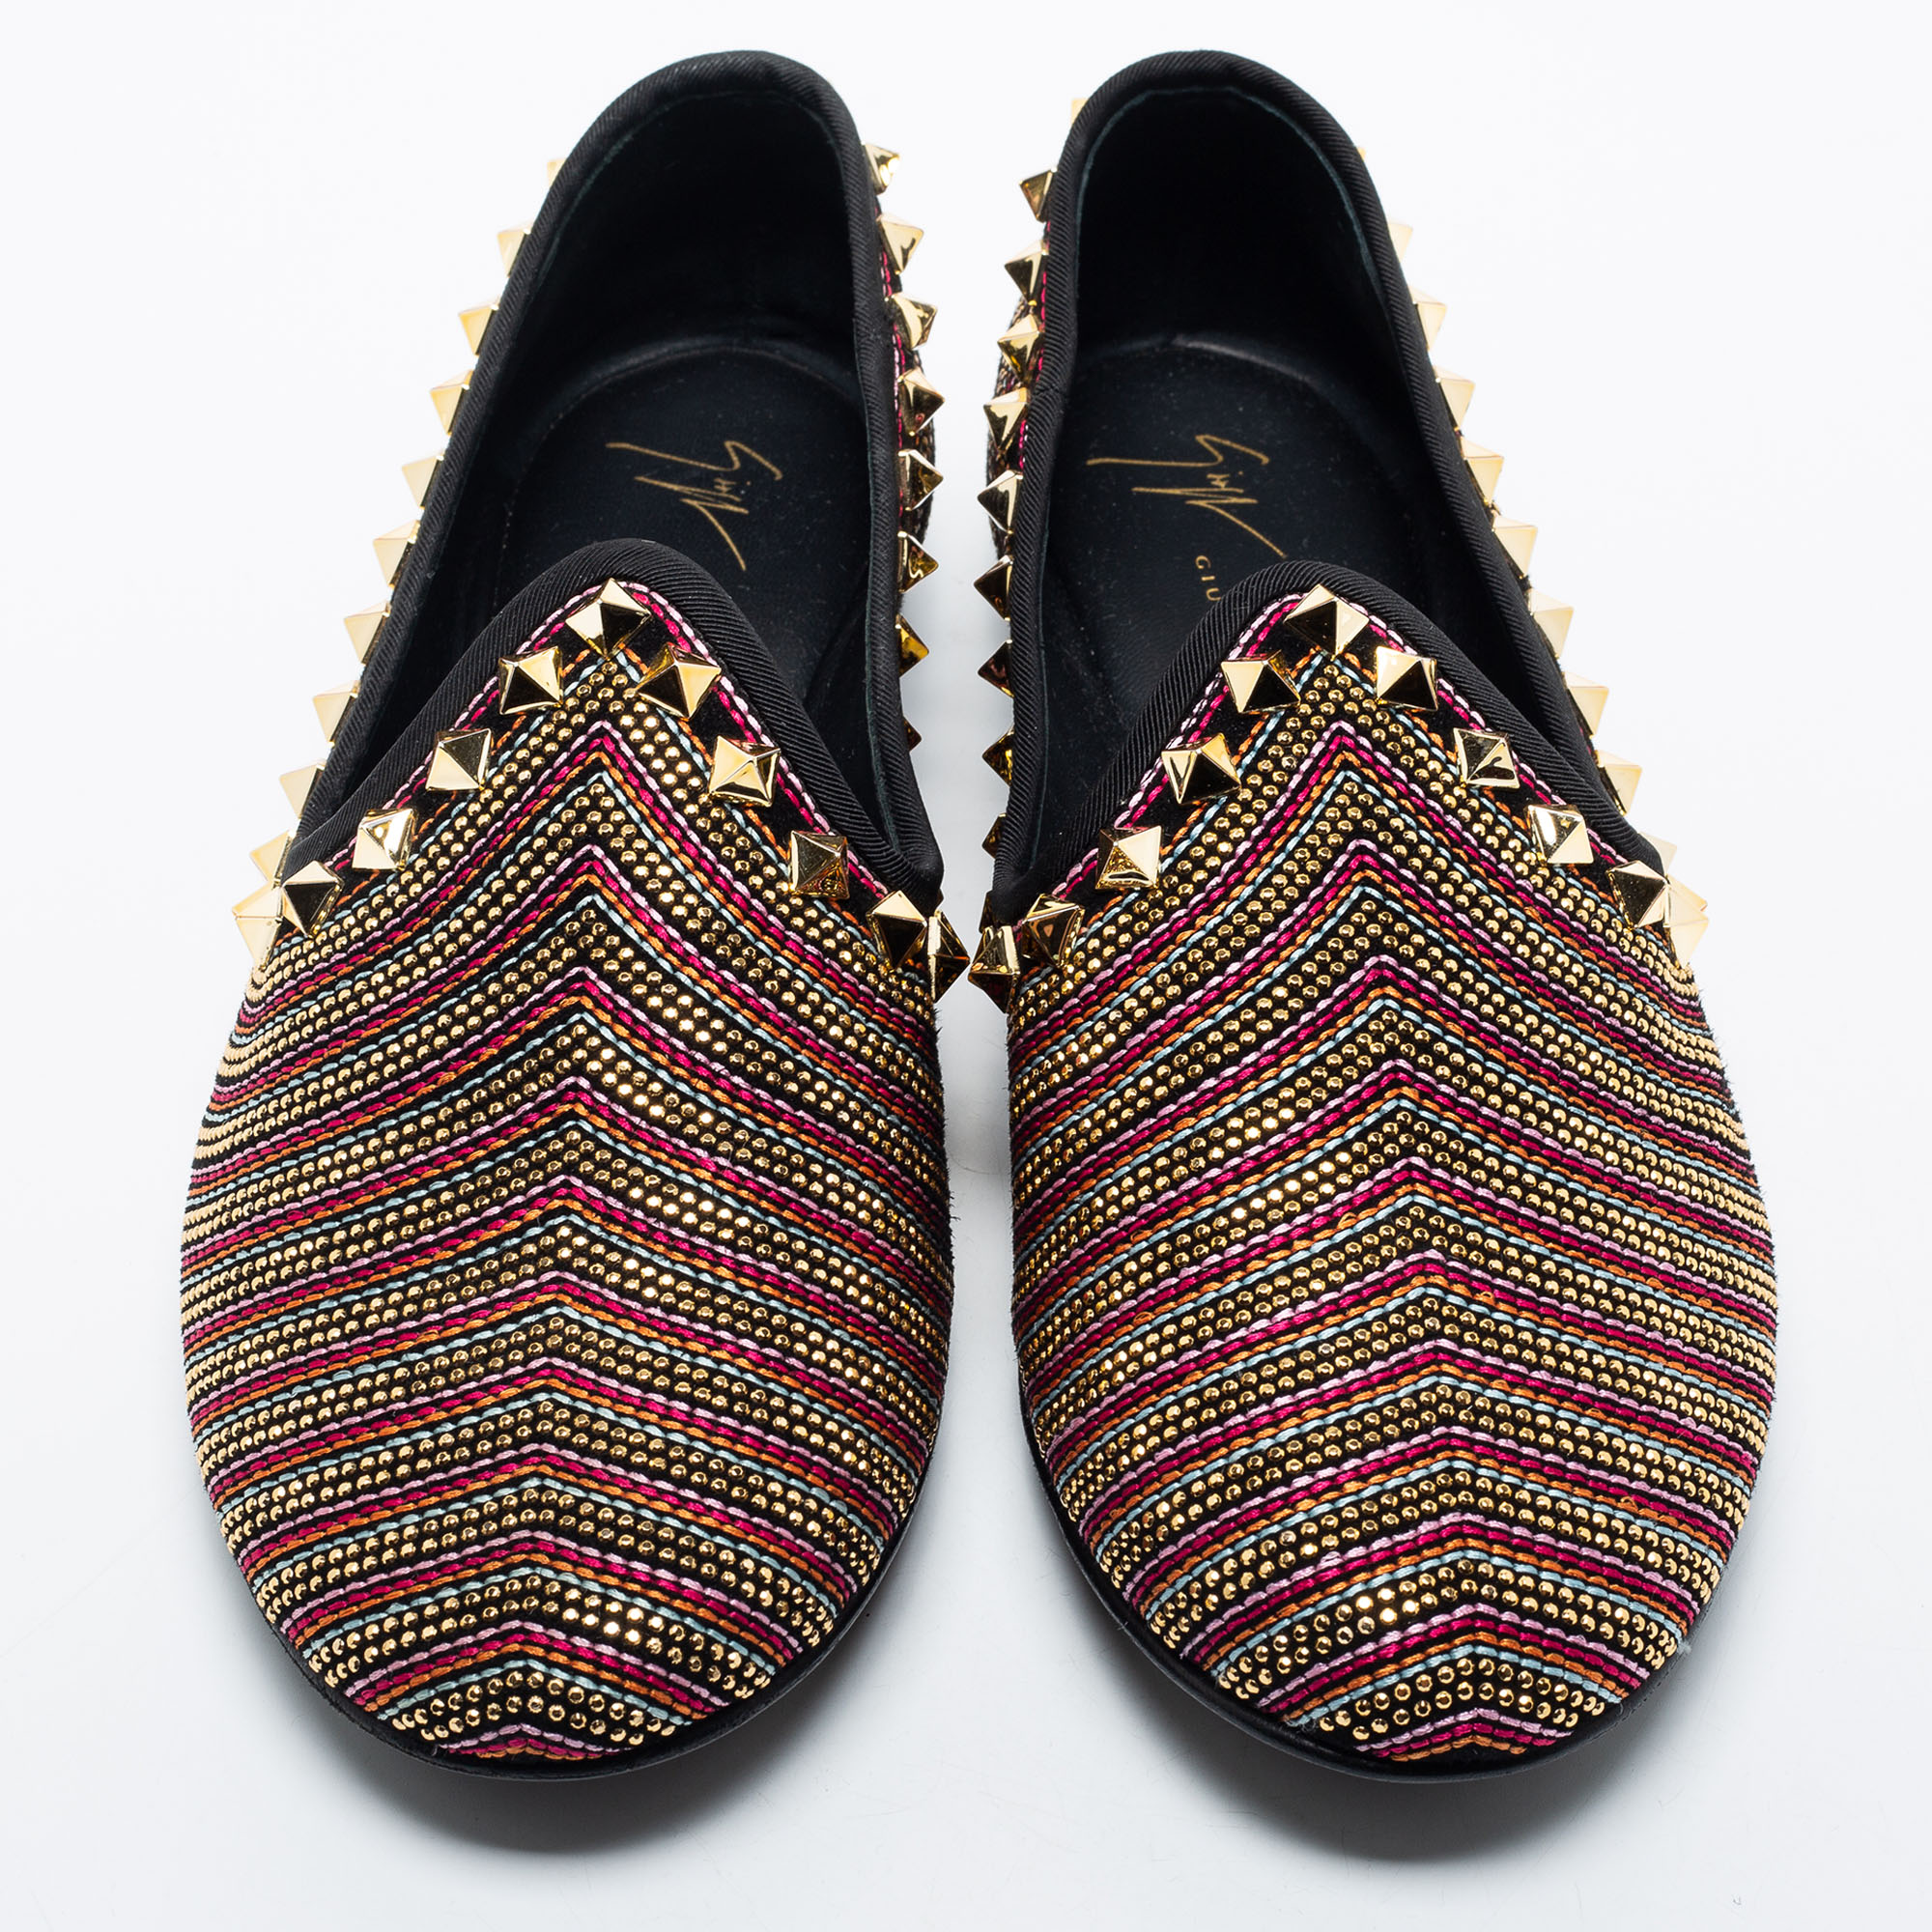 Giuseppe Zanotti Multicolor Embellished Suede Smoking Slippers Size 41